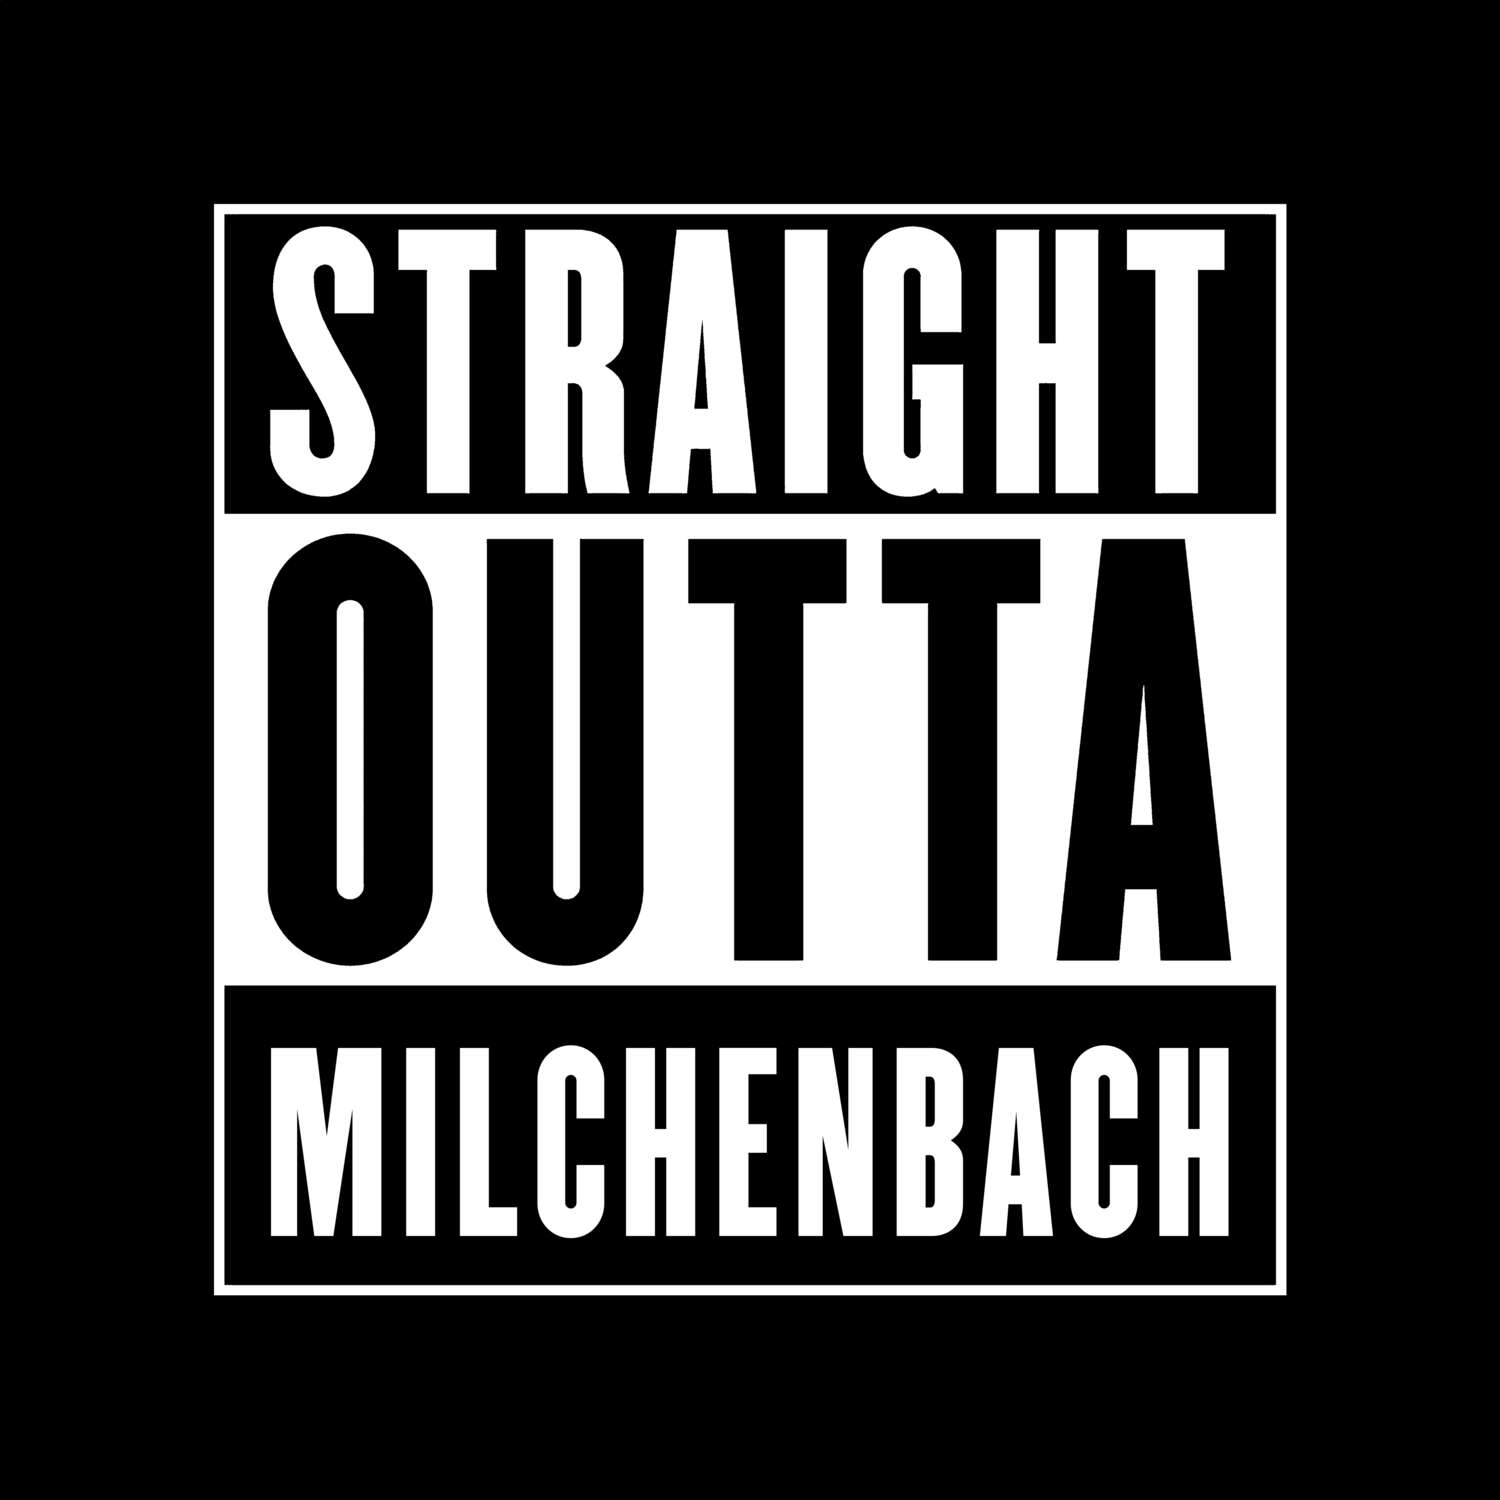 Milchenbach T-Shirt »Straight Outta«